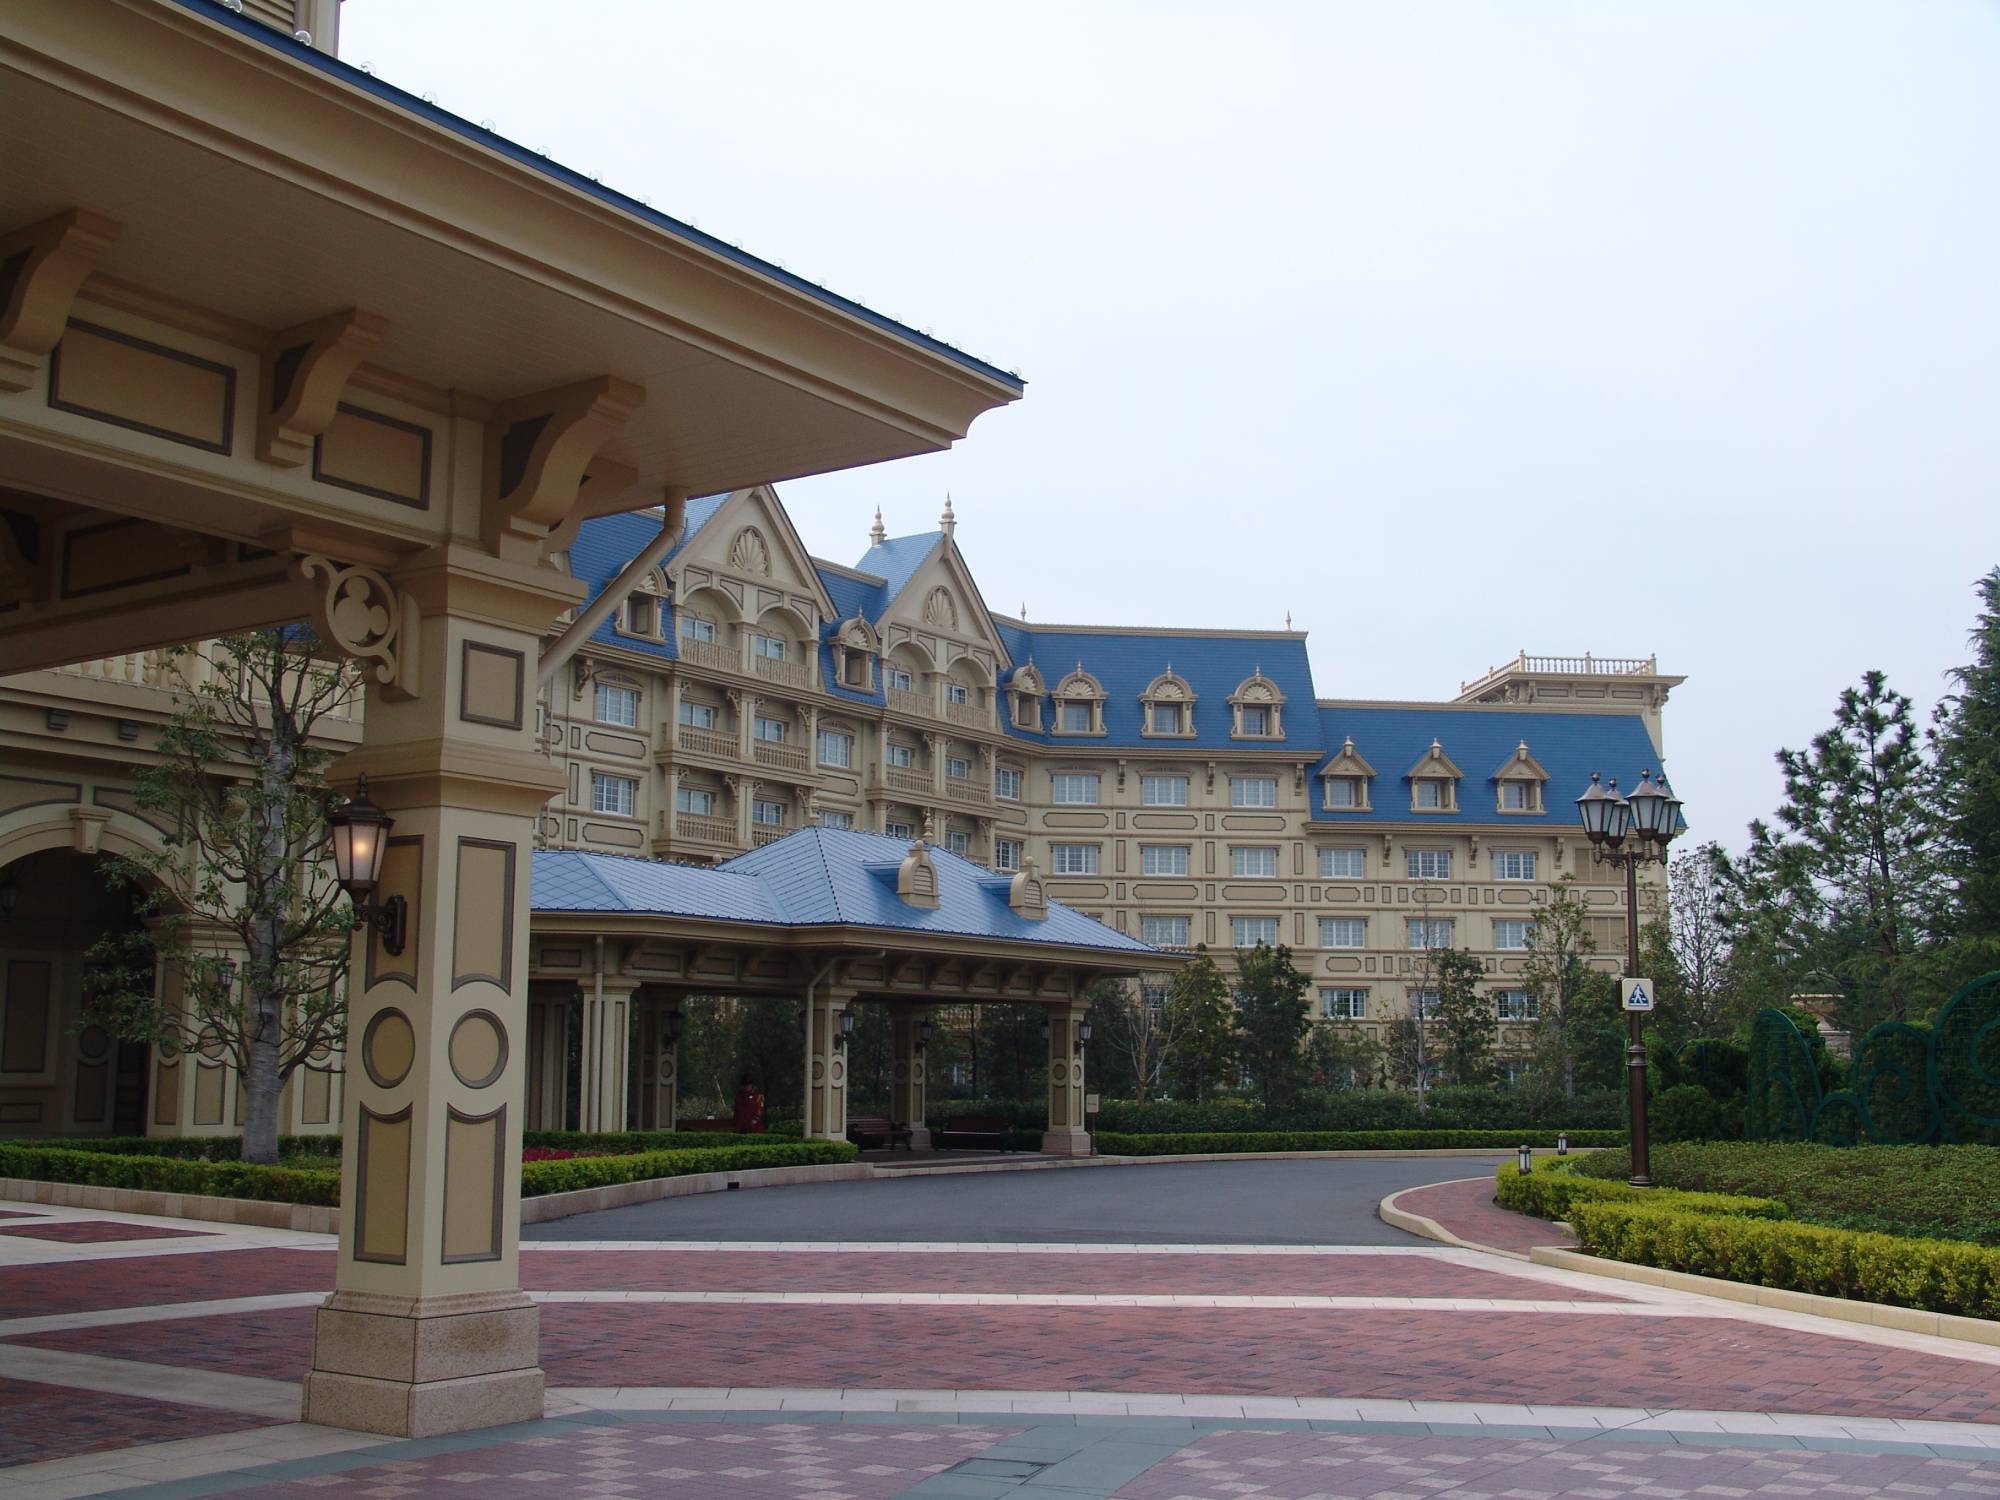 Tokyo Disney - Disneyland Hotel